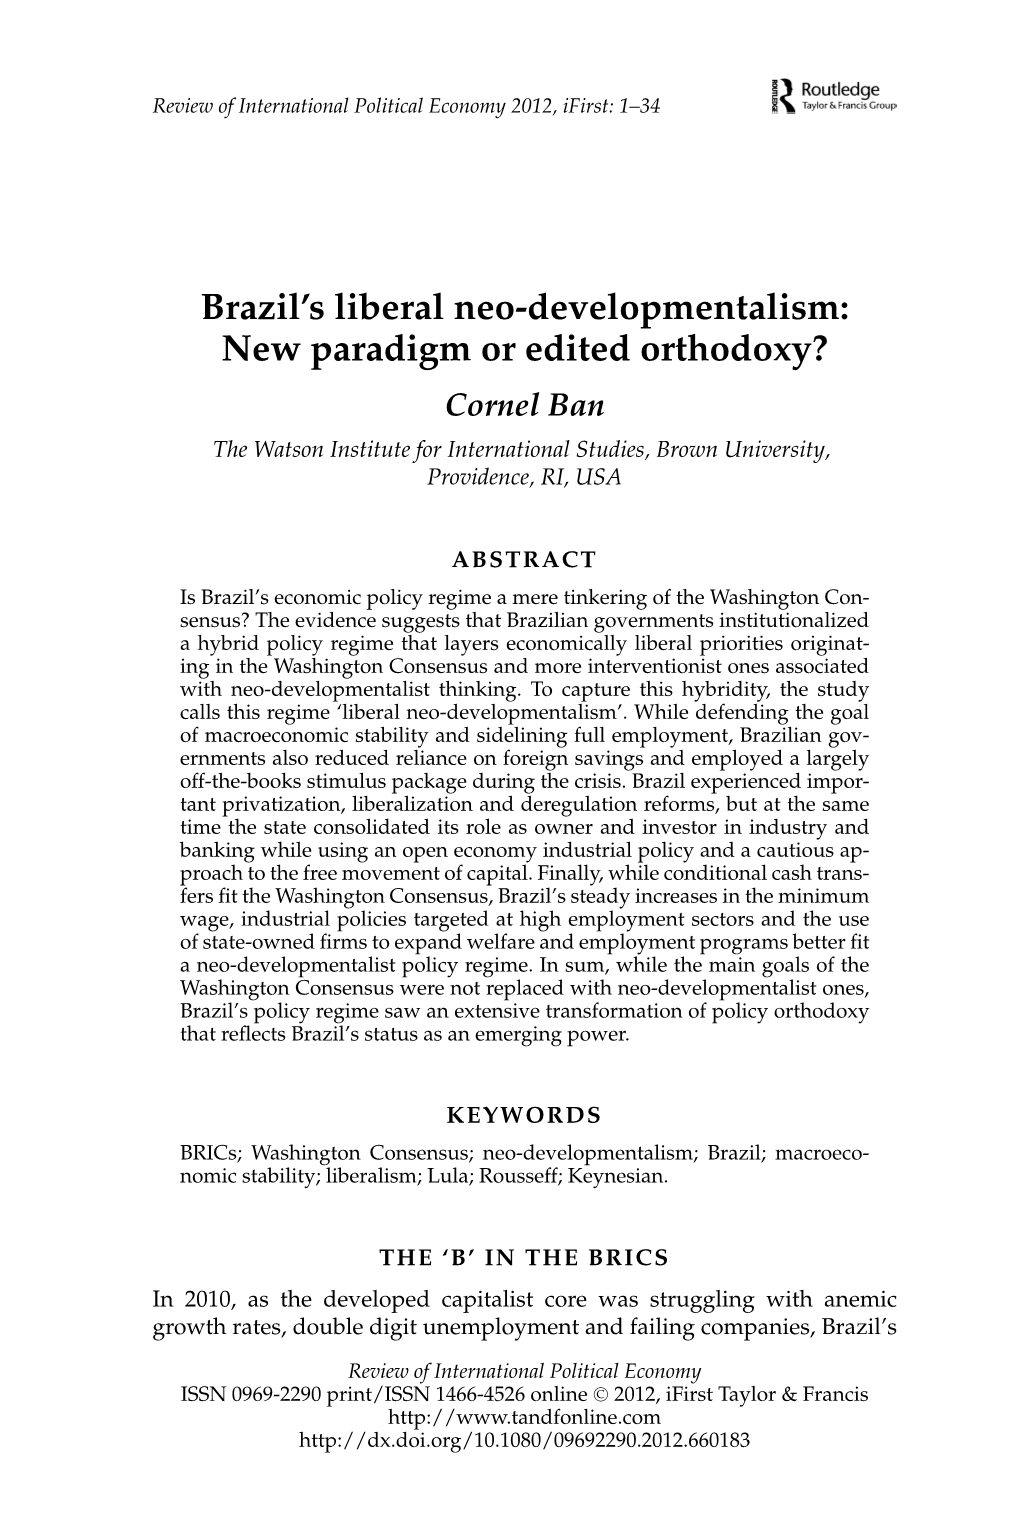 Brazil's Liberal Neo-Developmentalism